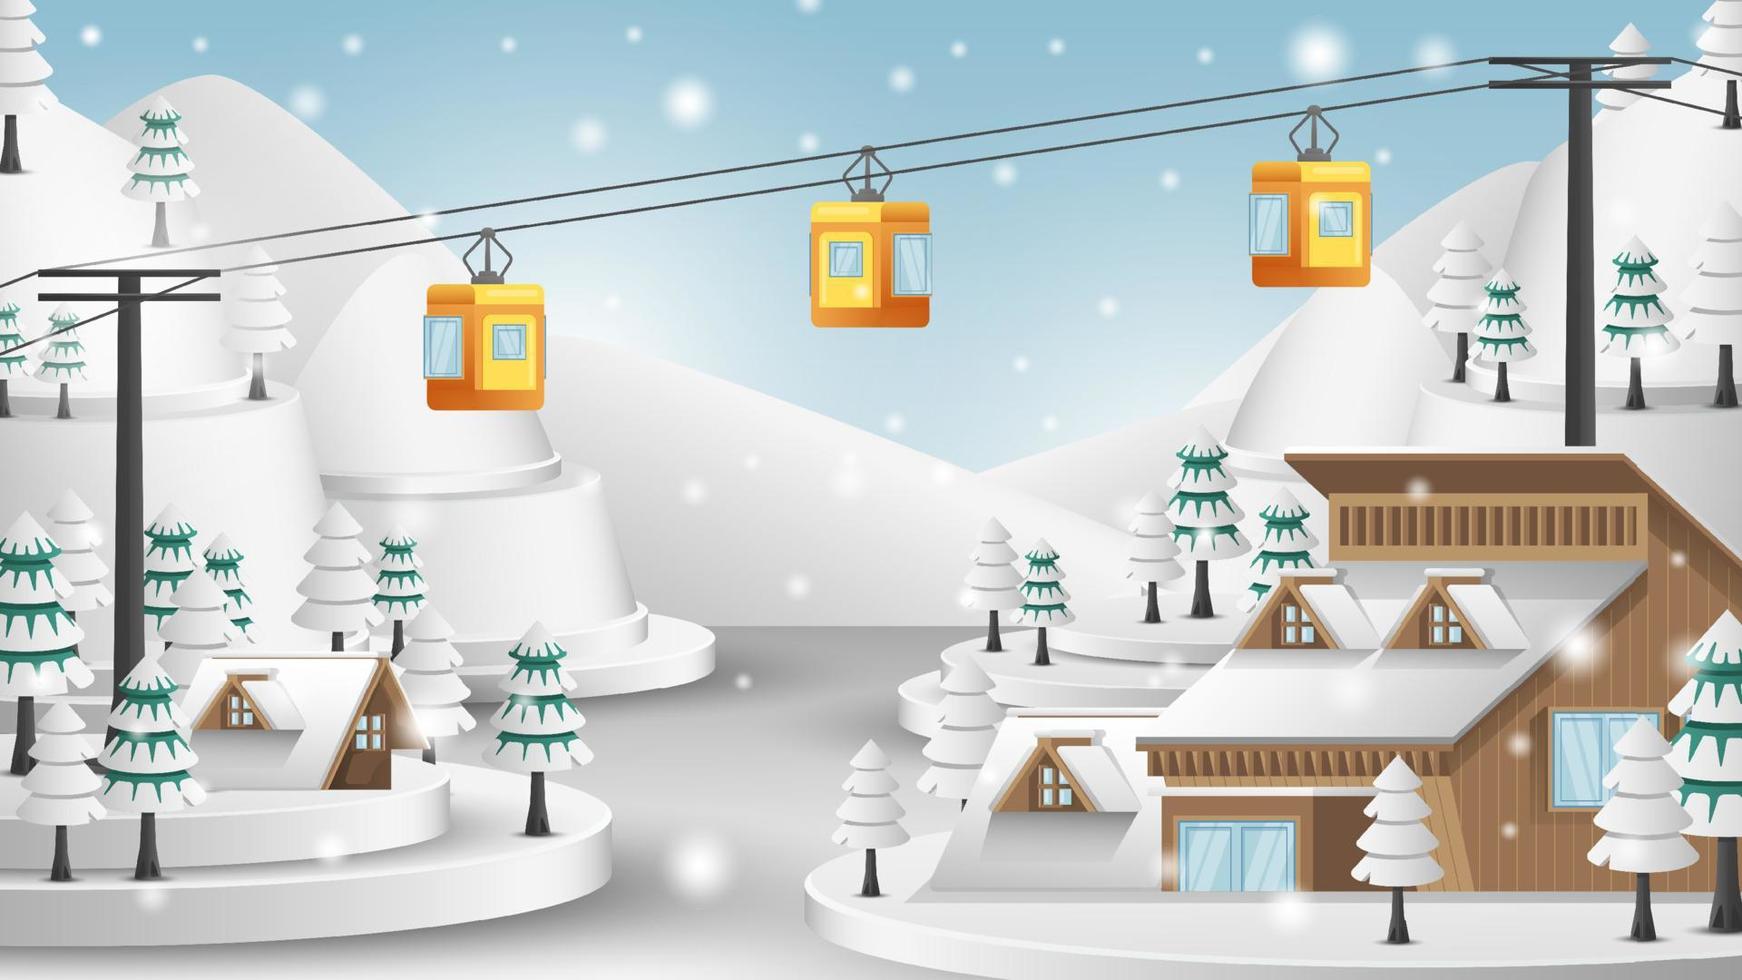 Cable Car in Winter Landscape Illustration vector